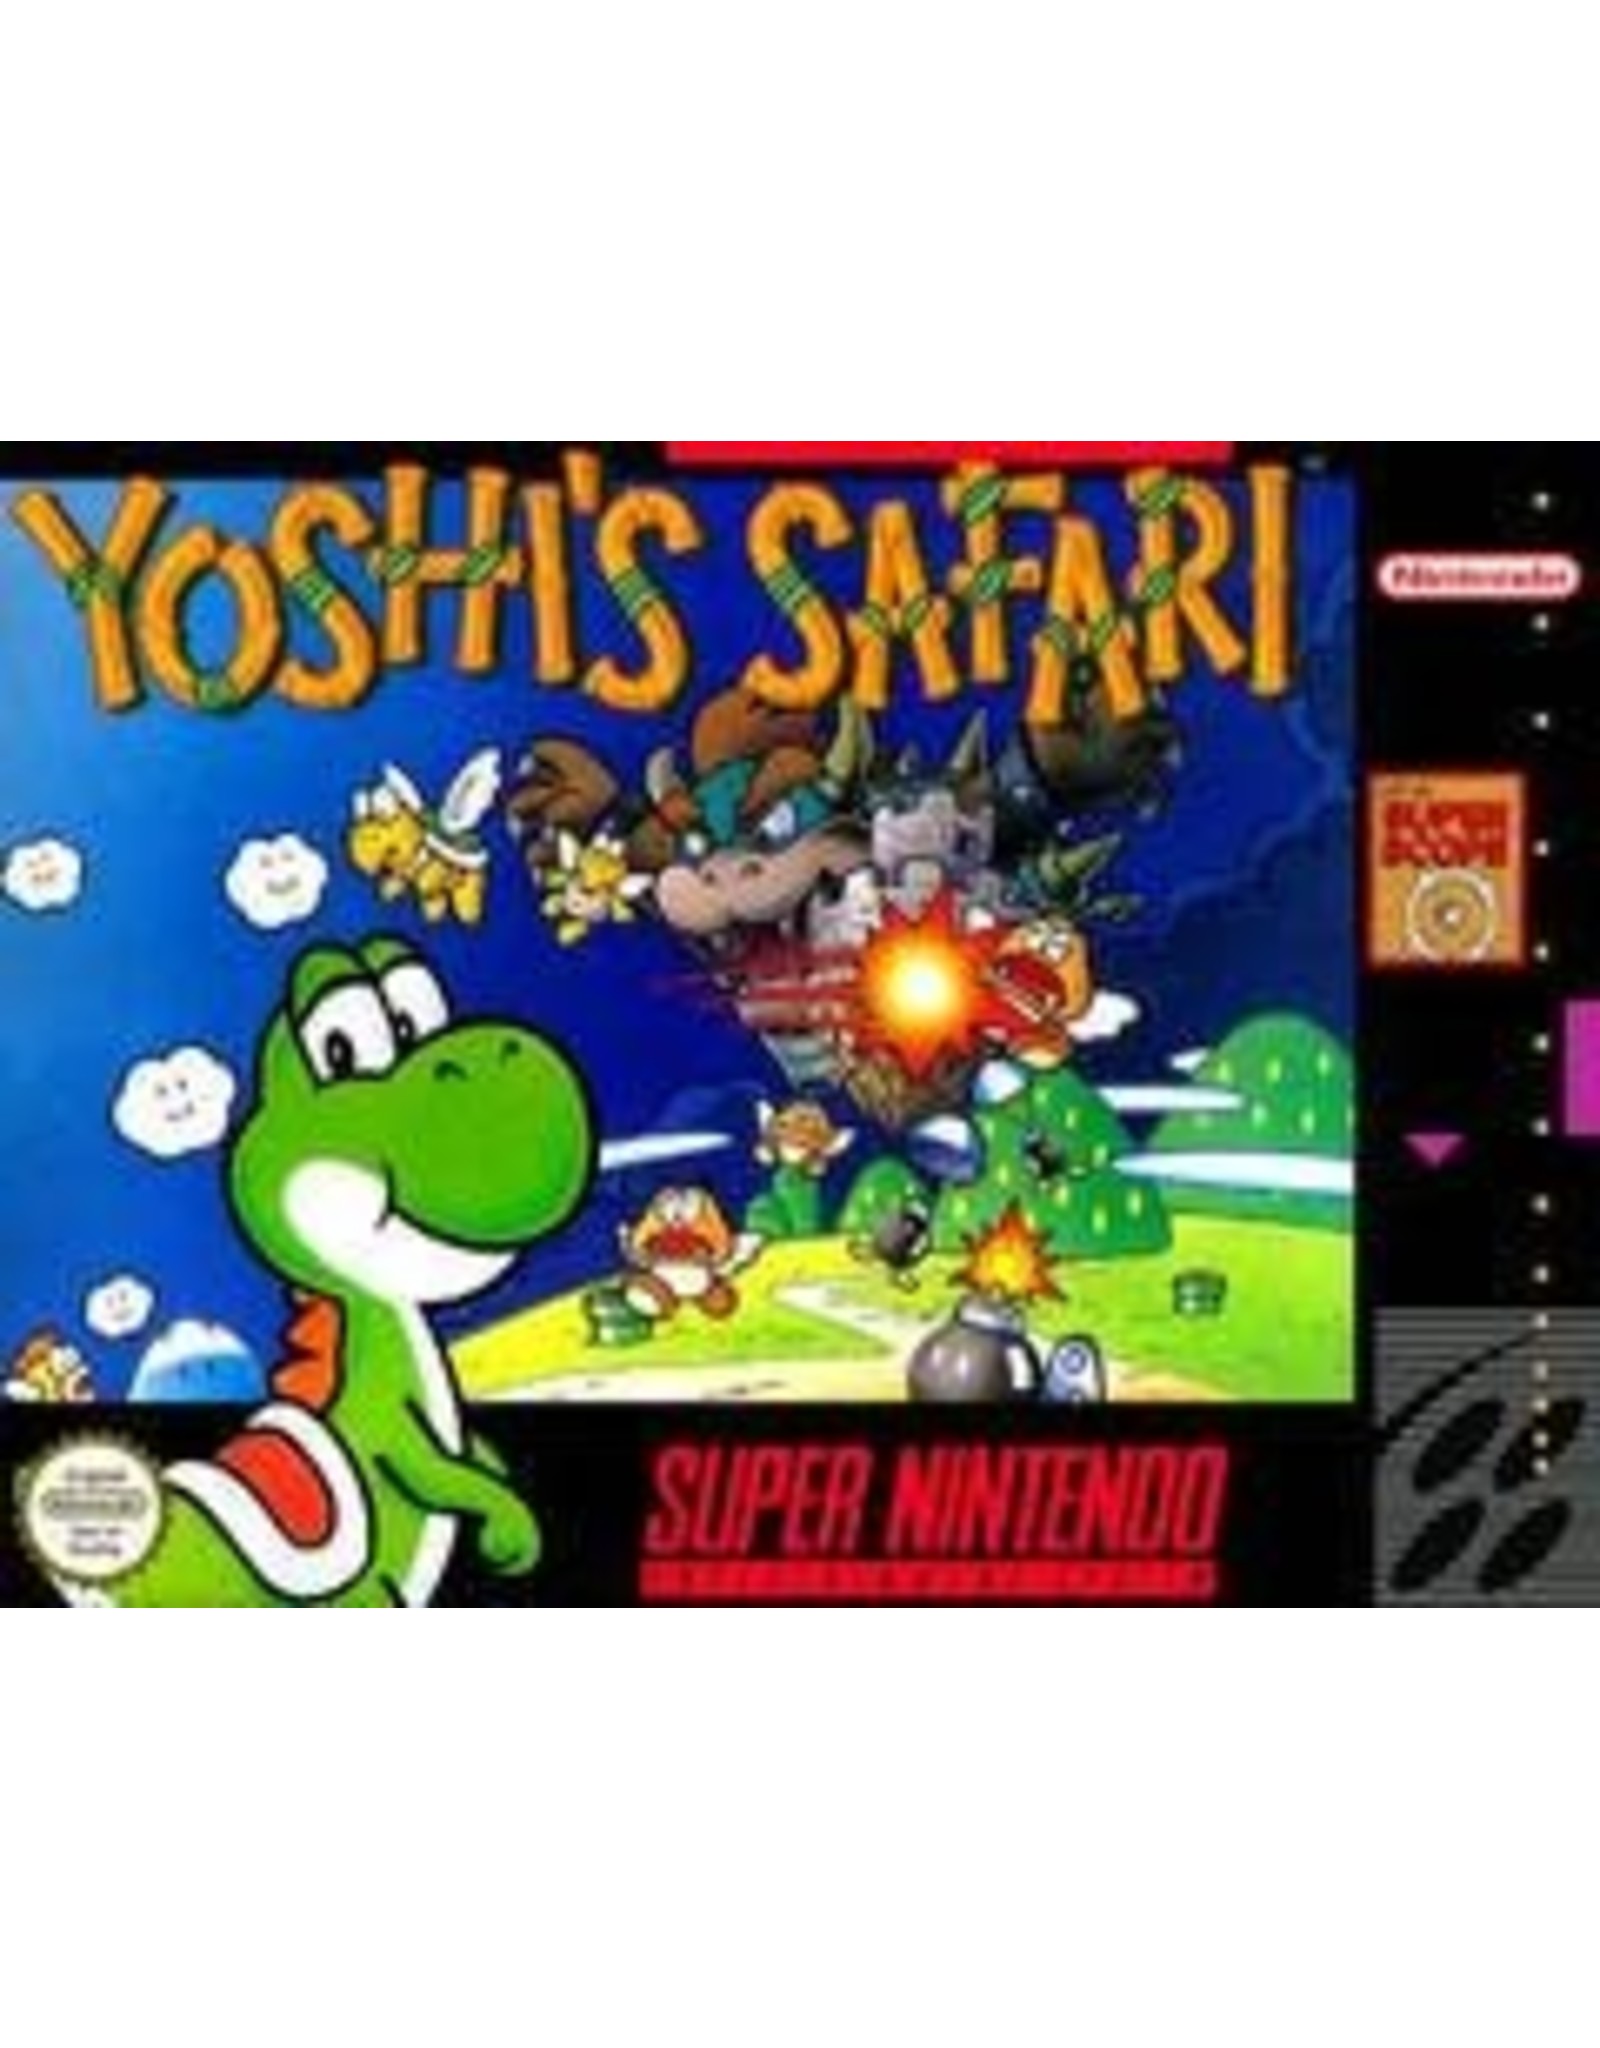 Super Nintendo Yoshi's Safari (Cart Only) *Super Scope Required*